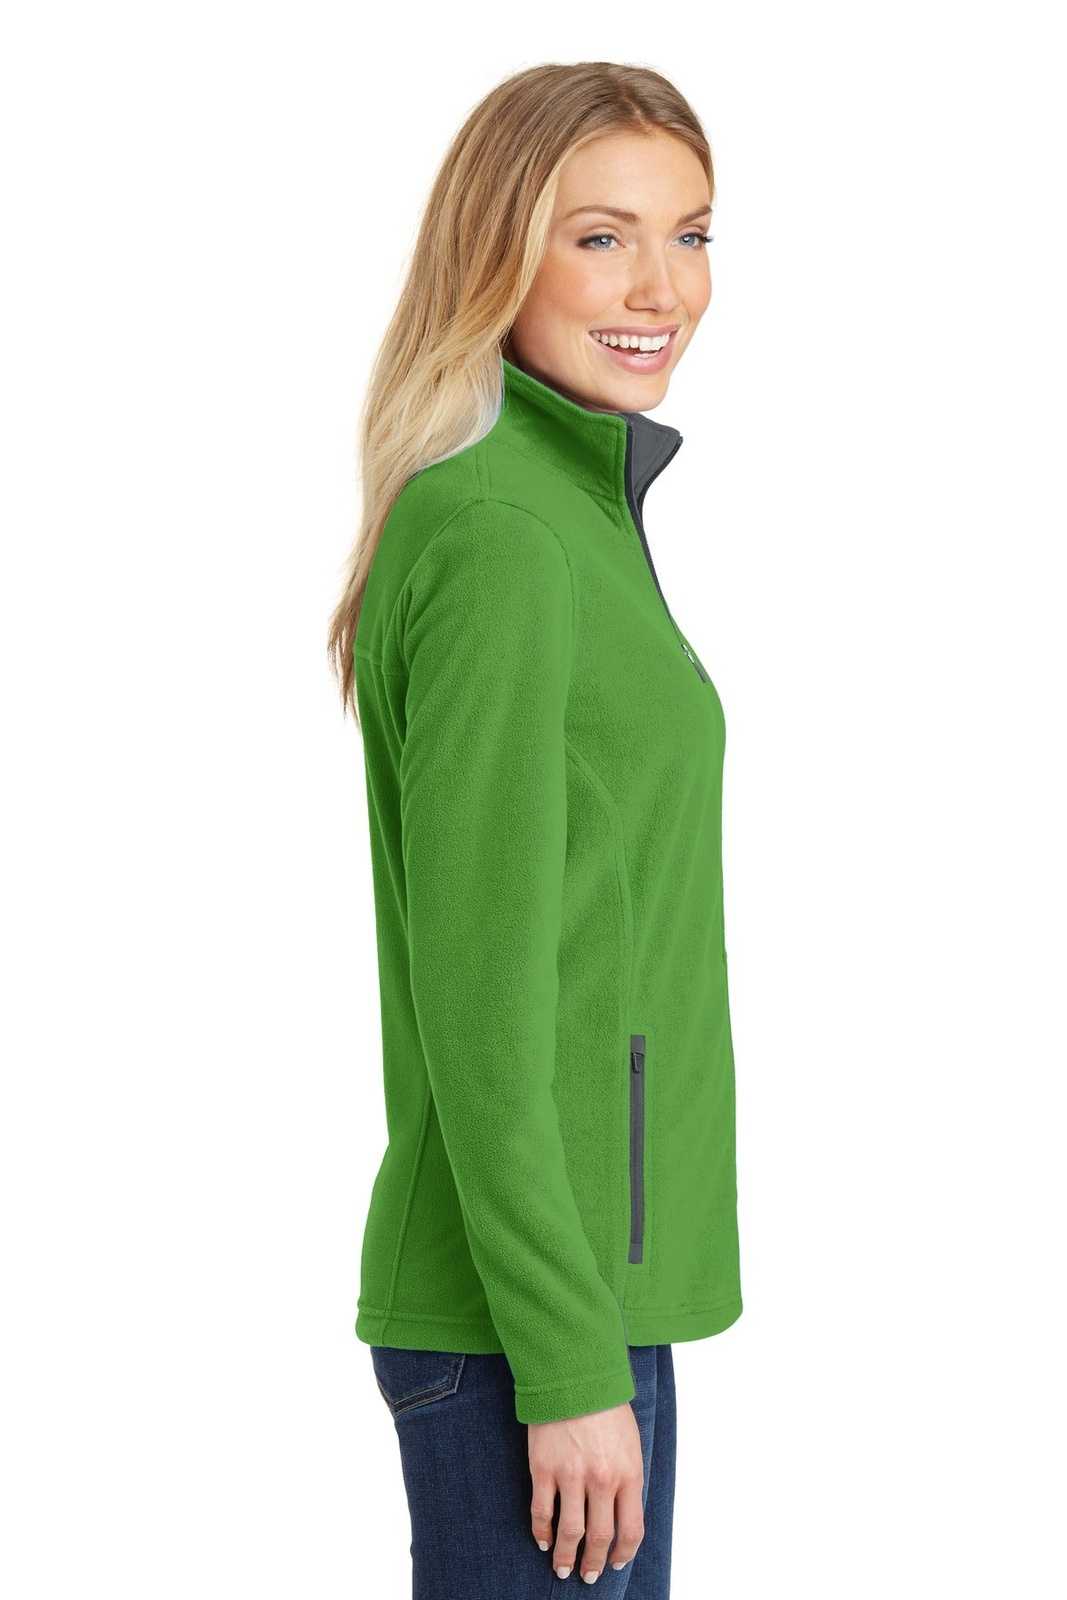 Port Authority L233 Ladies Summit Fleece Full-Zip Jacket - Vine Green Magnet - HIT a Double - 3